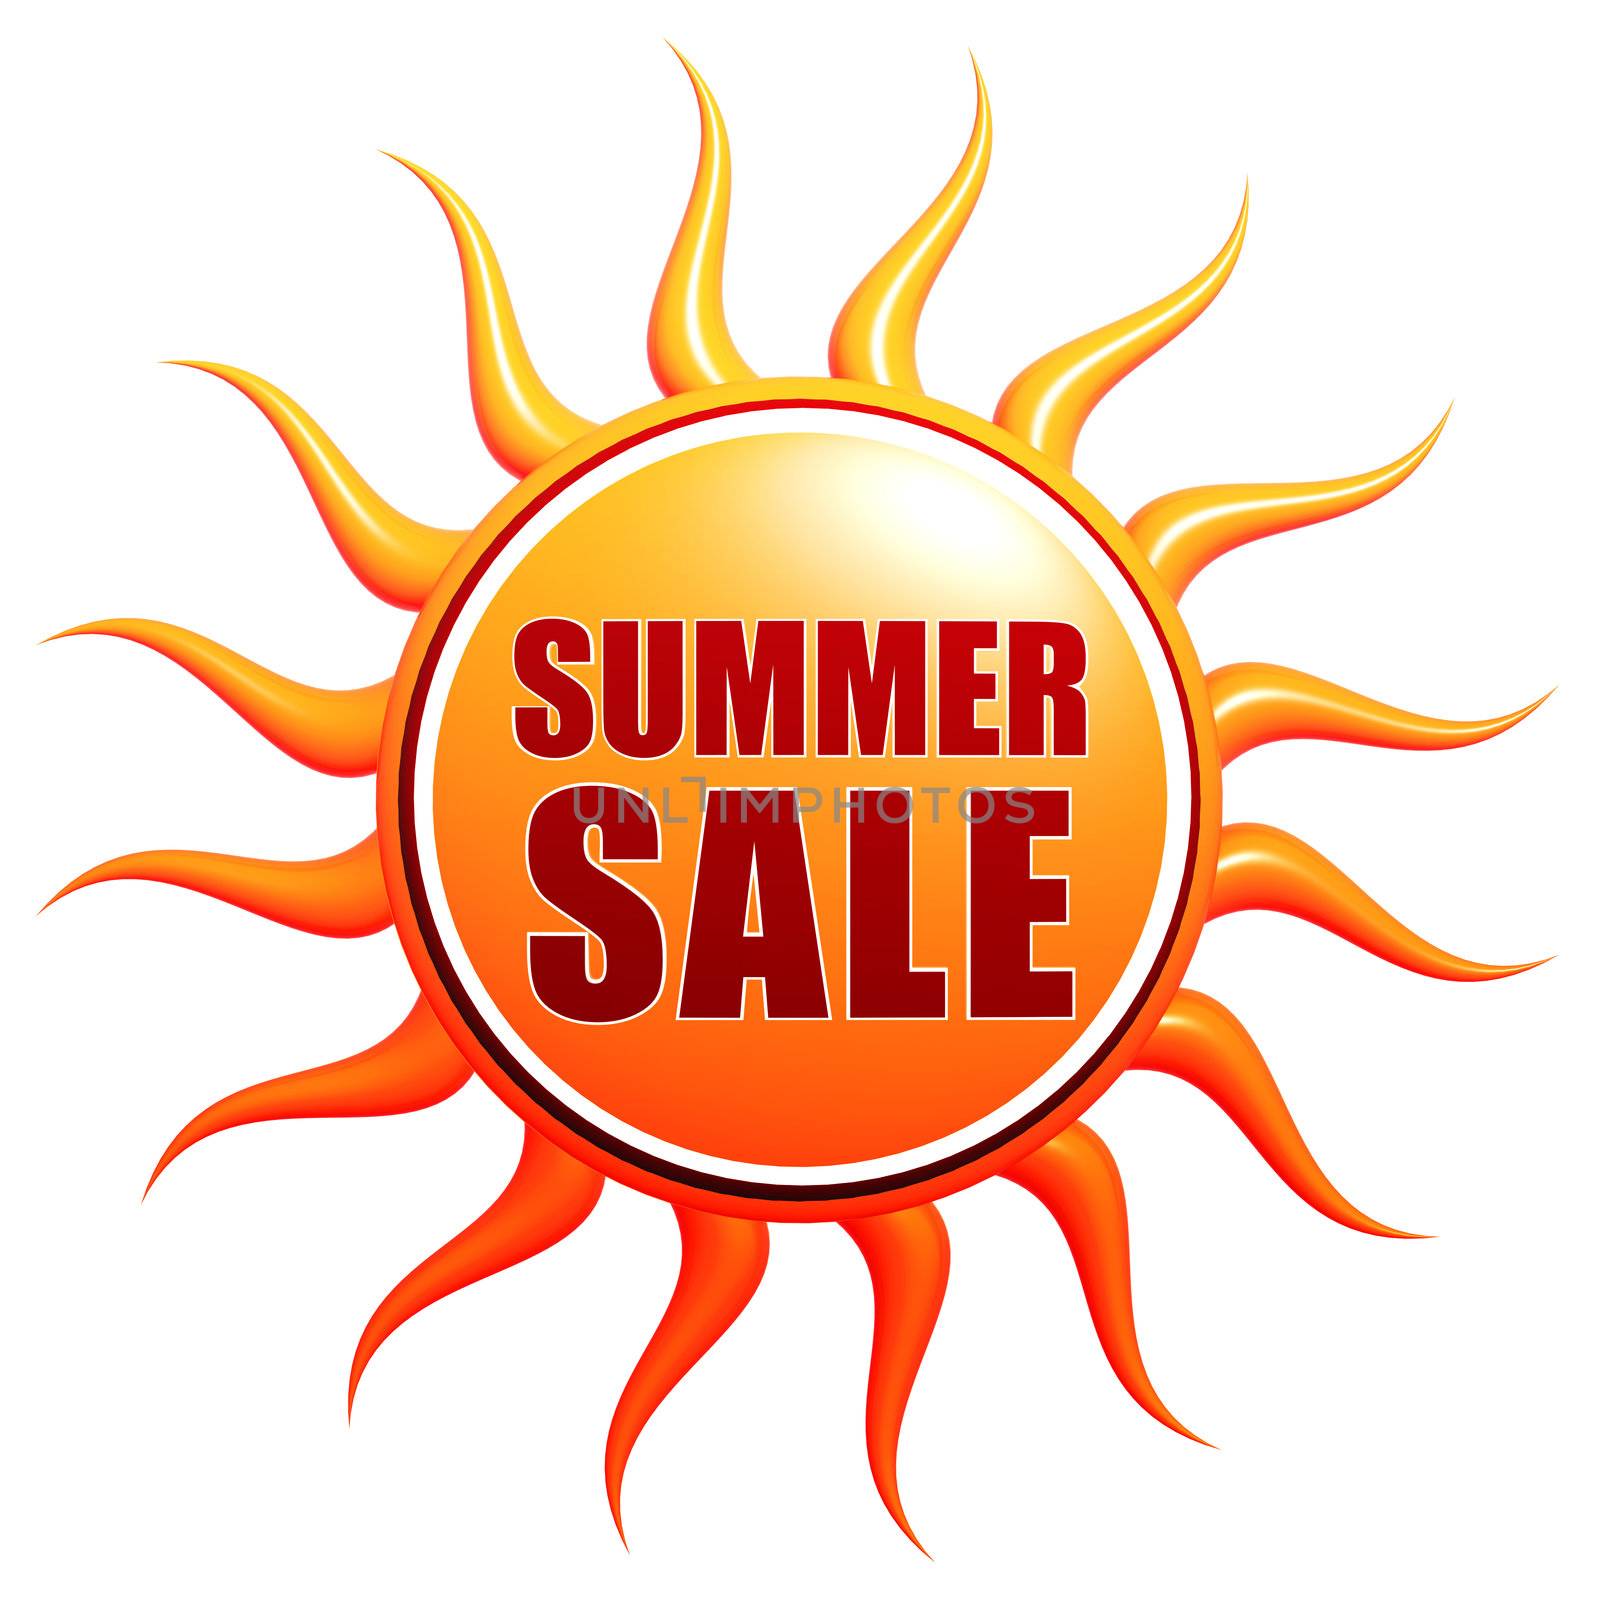 Summer sale by marinini